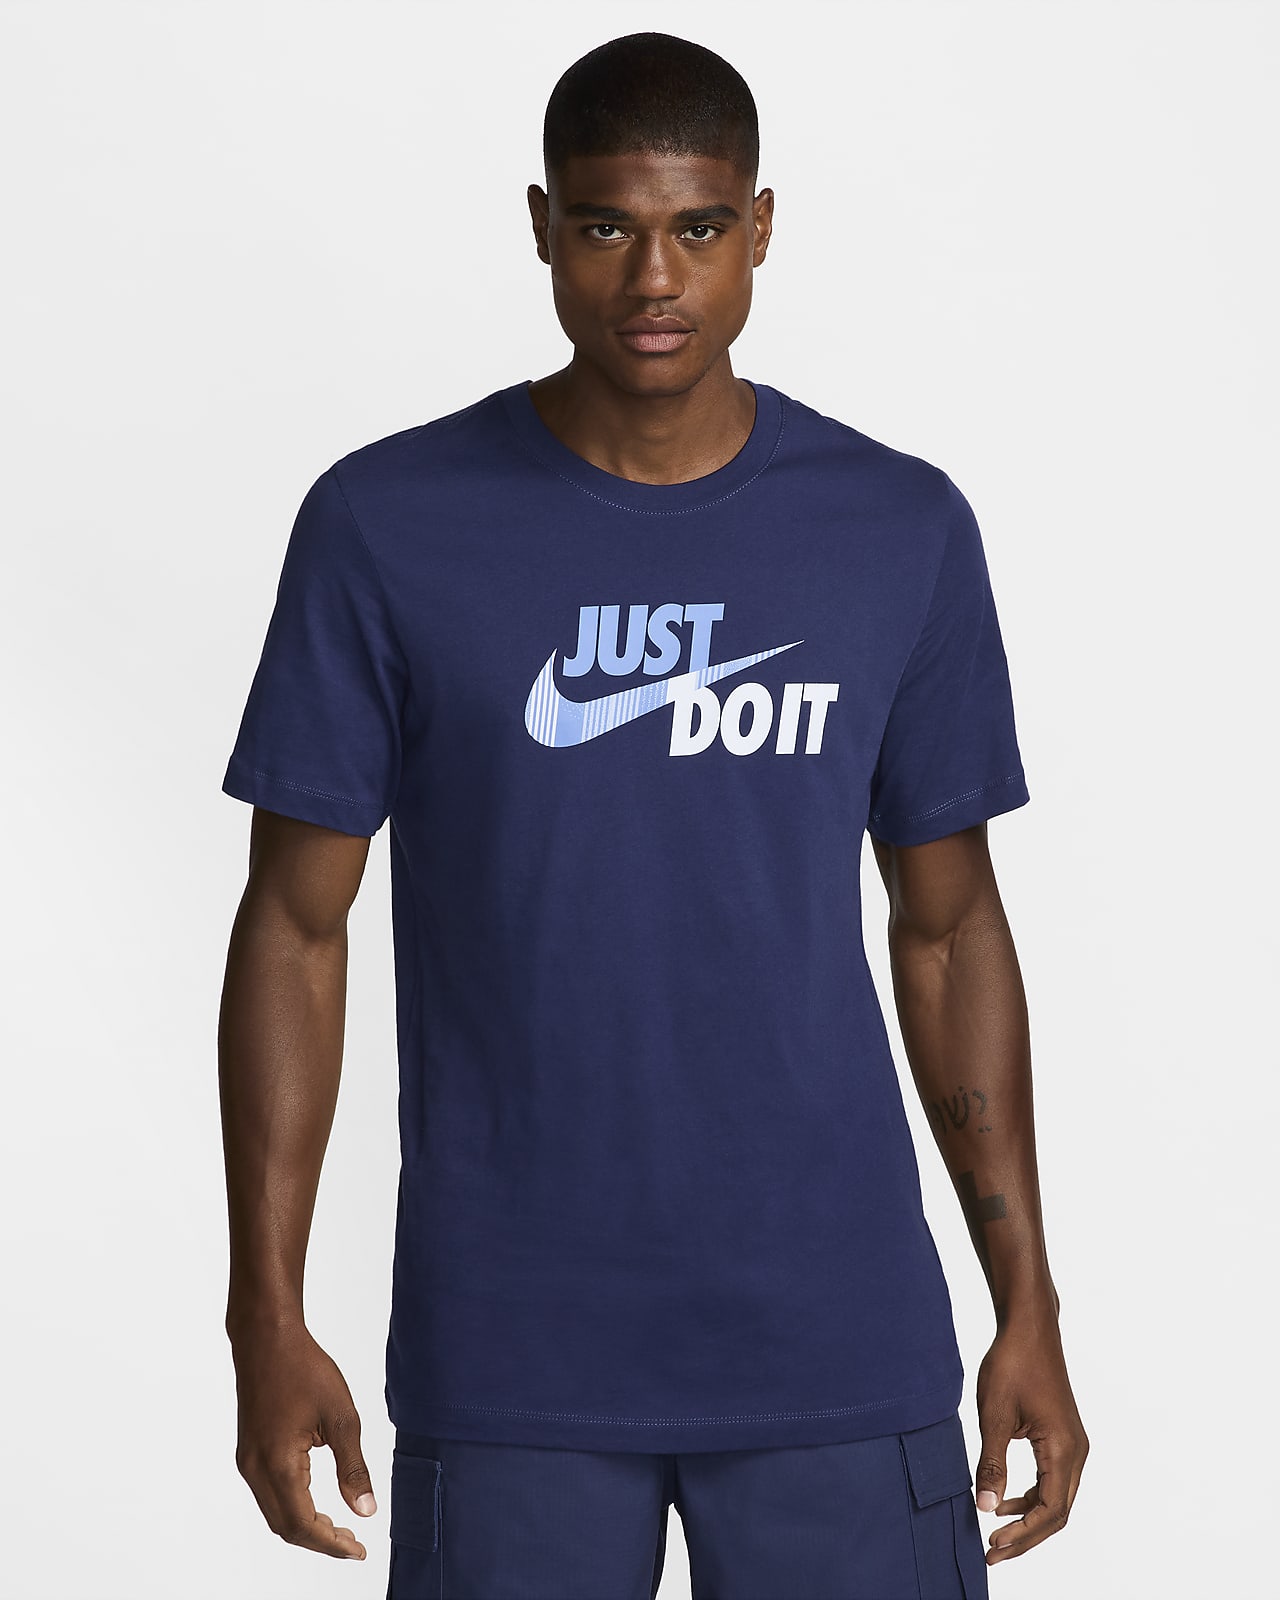 Tottenham Hotspur Men's Nike Soccer T-Shirt